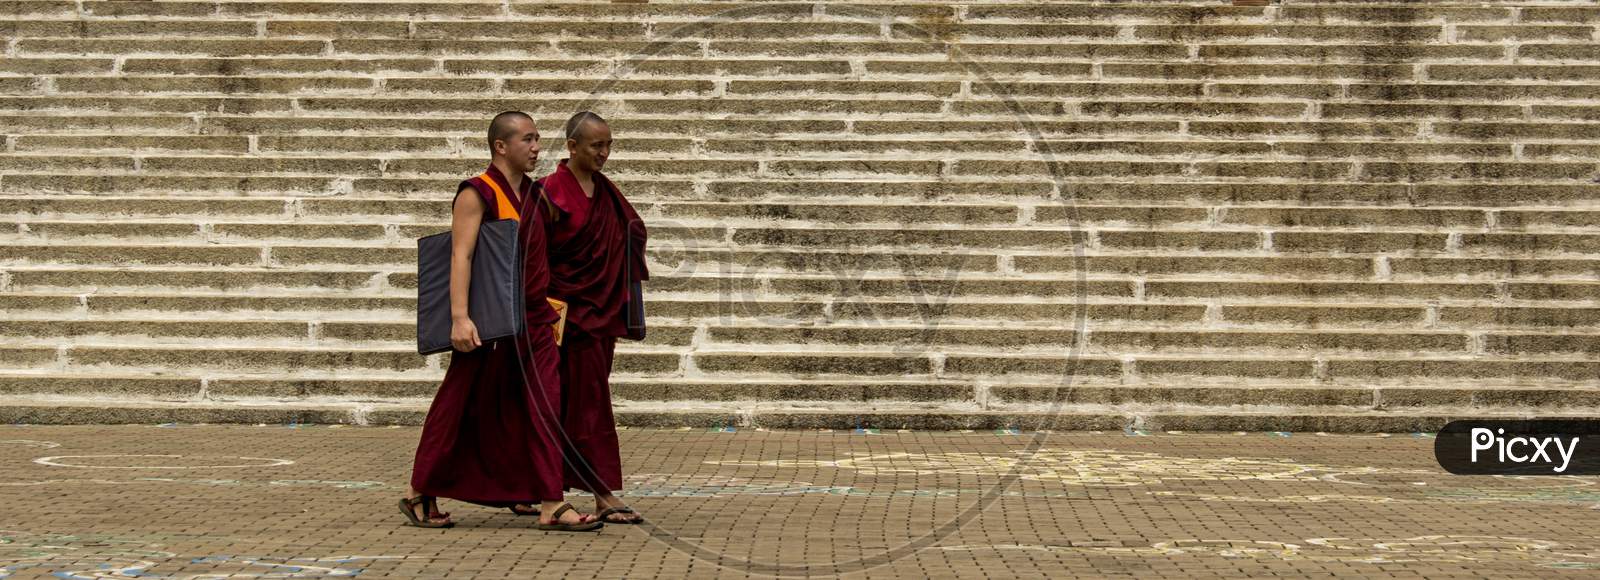 Two Tibetan Monks walking in a Buddhist Monastery in Bylukoppa /India.